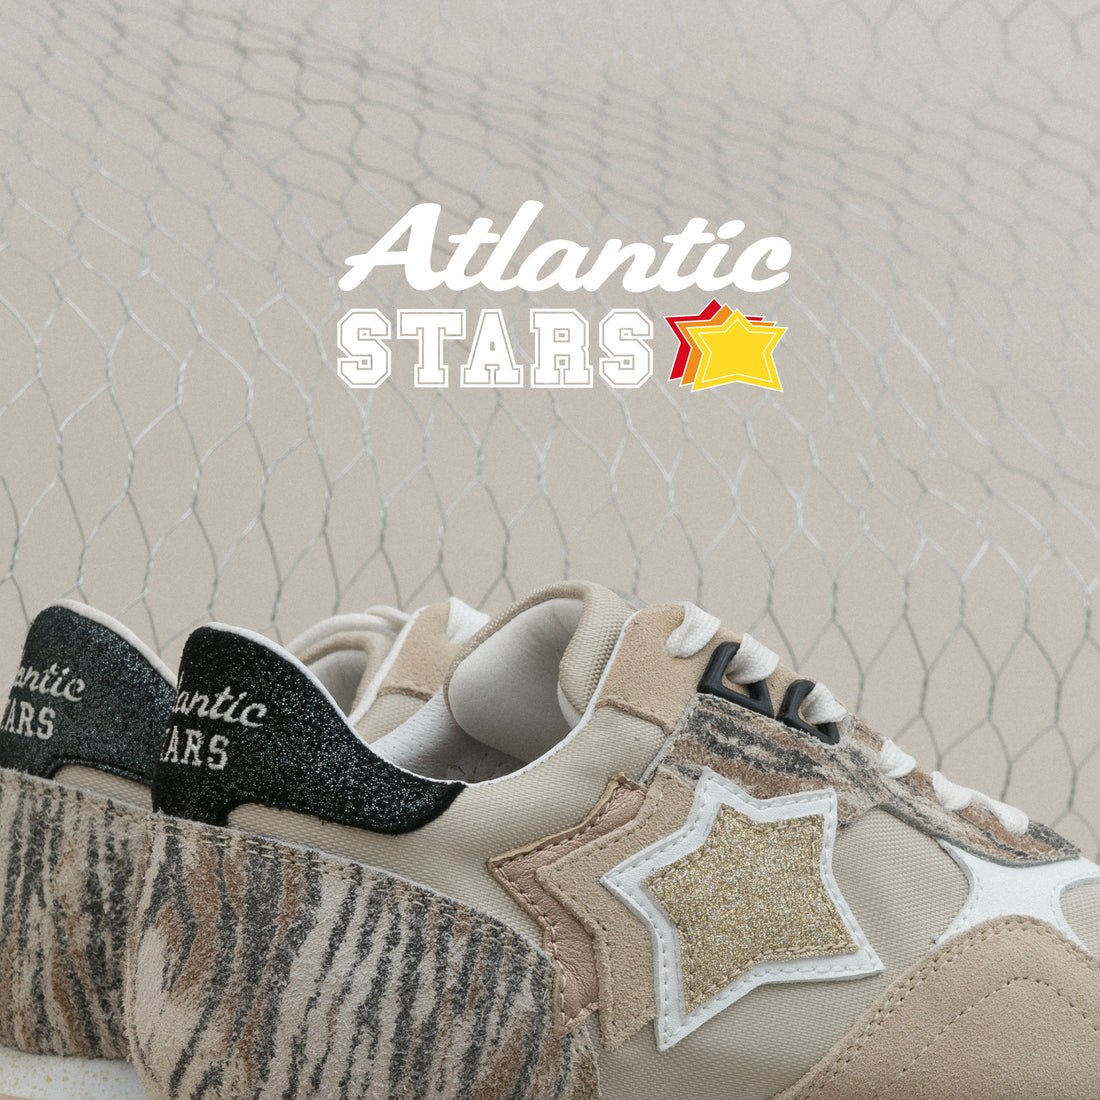 Atlantic STARS 価格改定のお知らせ – アトランティック スターズ